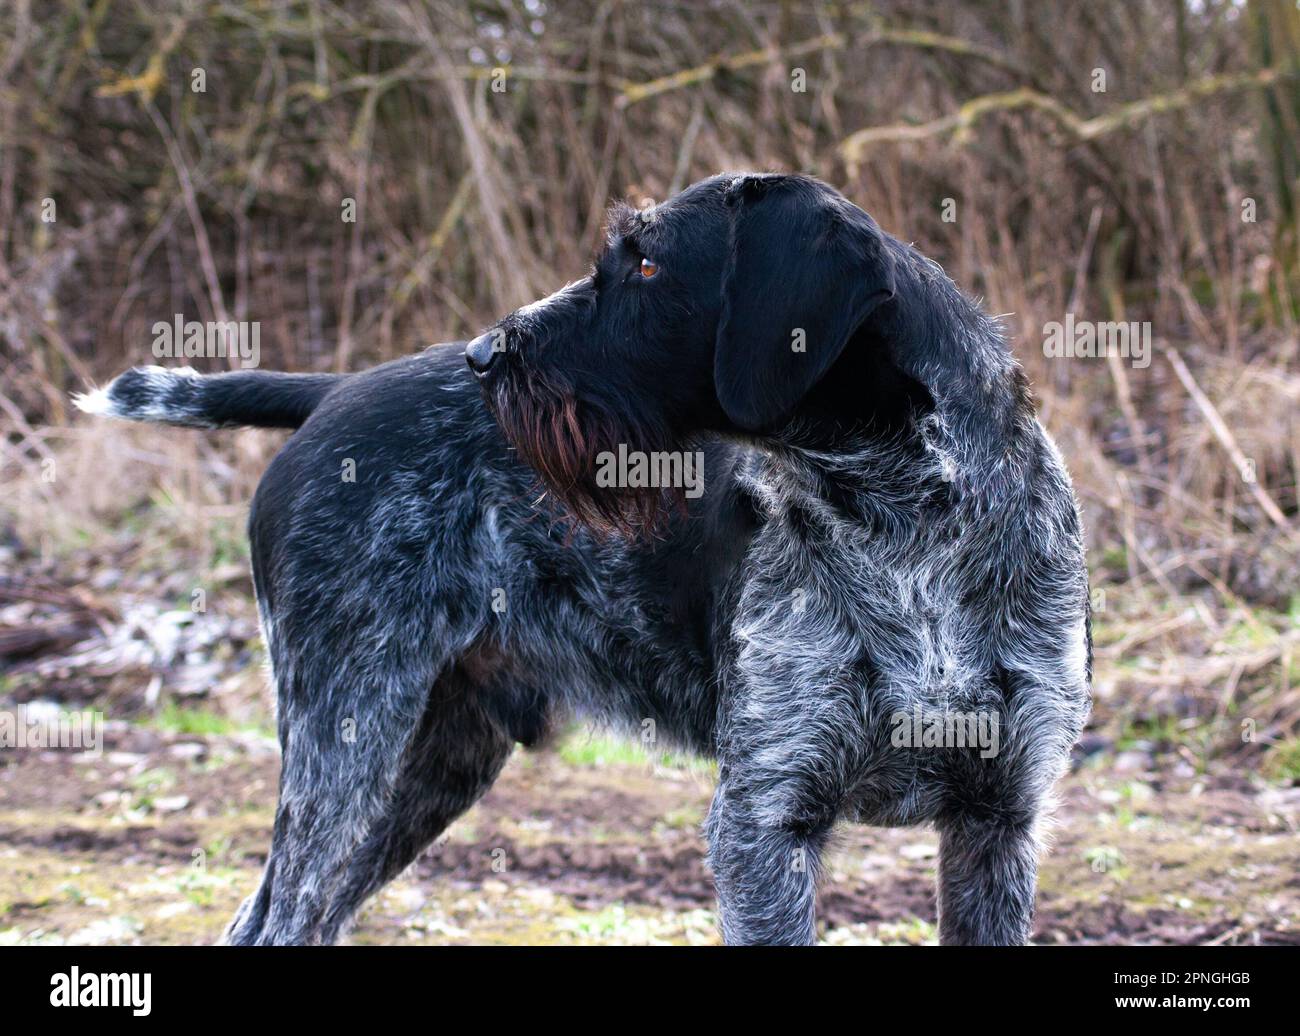 Raza de perro de caza fotografías e imágenes de alta resolución - Alamy